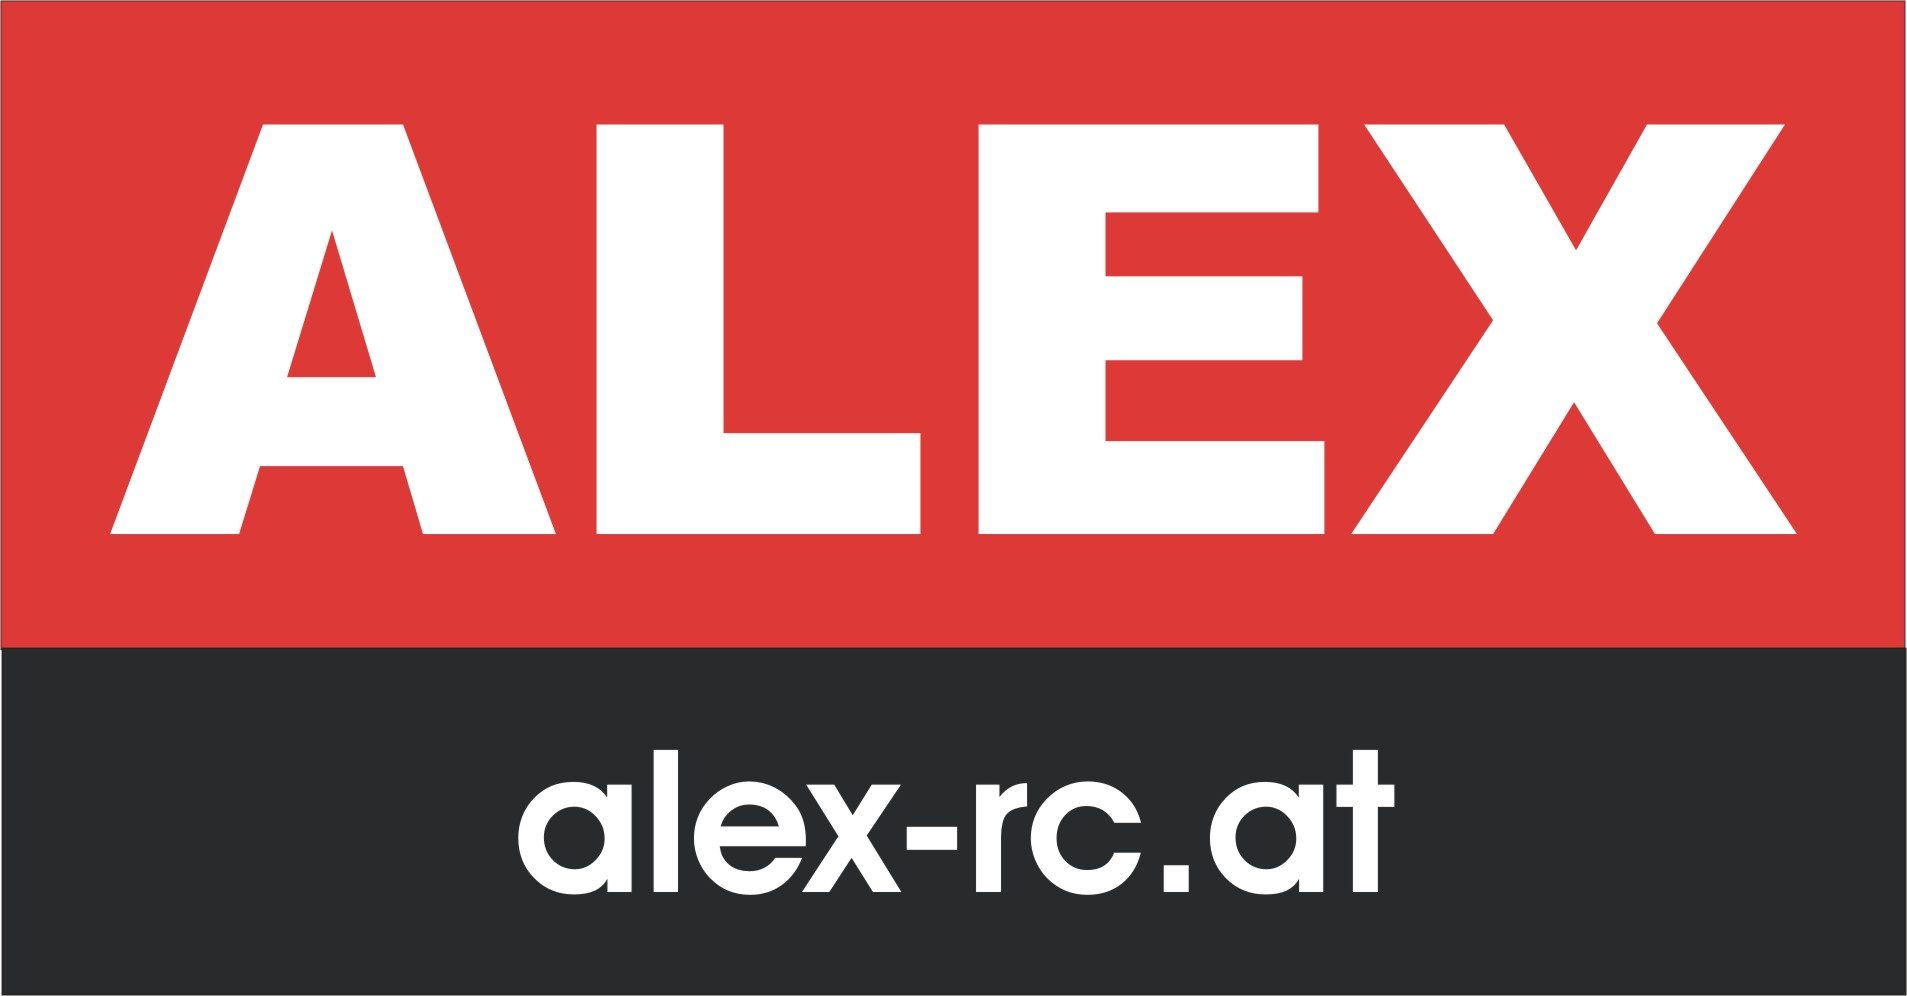 ALEX-RC